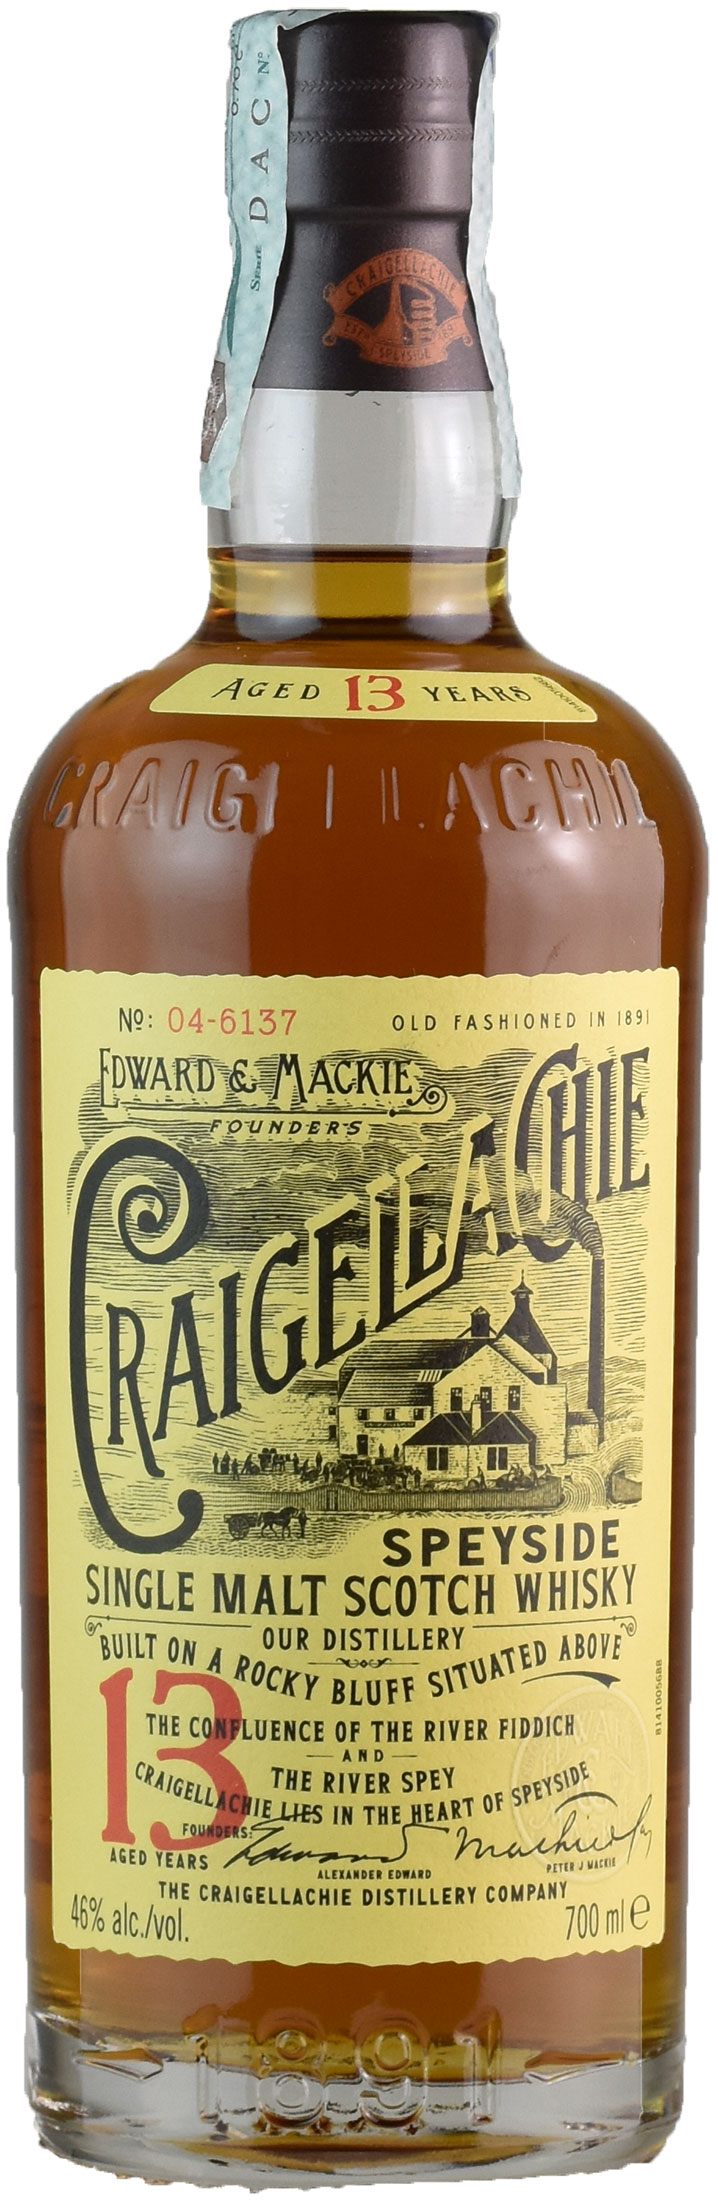 Craigellachie Single Malt Scotch Whisky 13 Anni